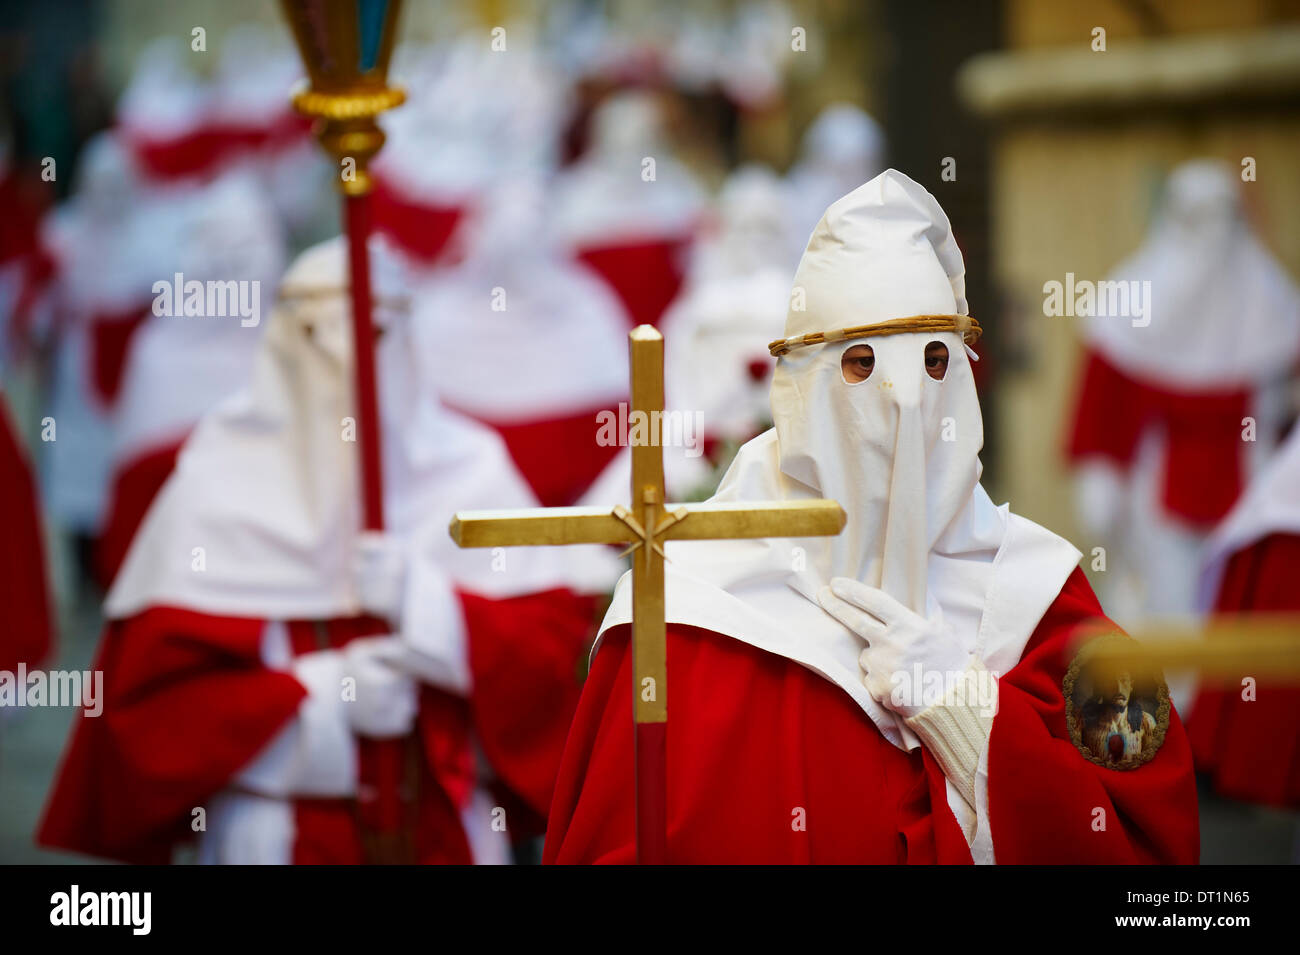 Procession on Good Friday, Enna, Sicily, Italy, Europe Stock Photo